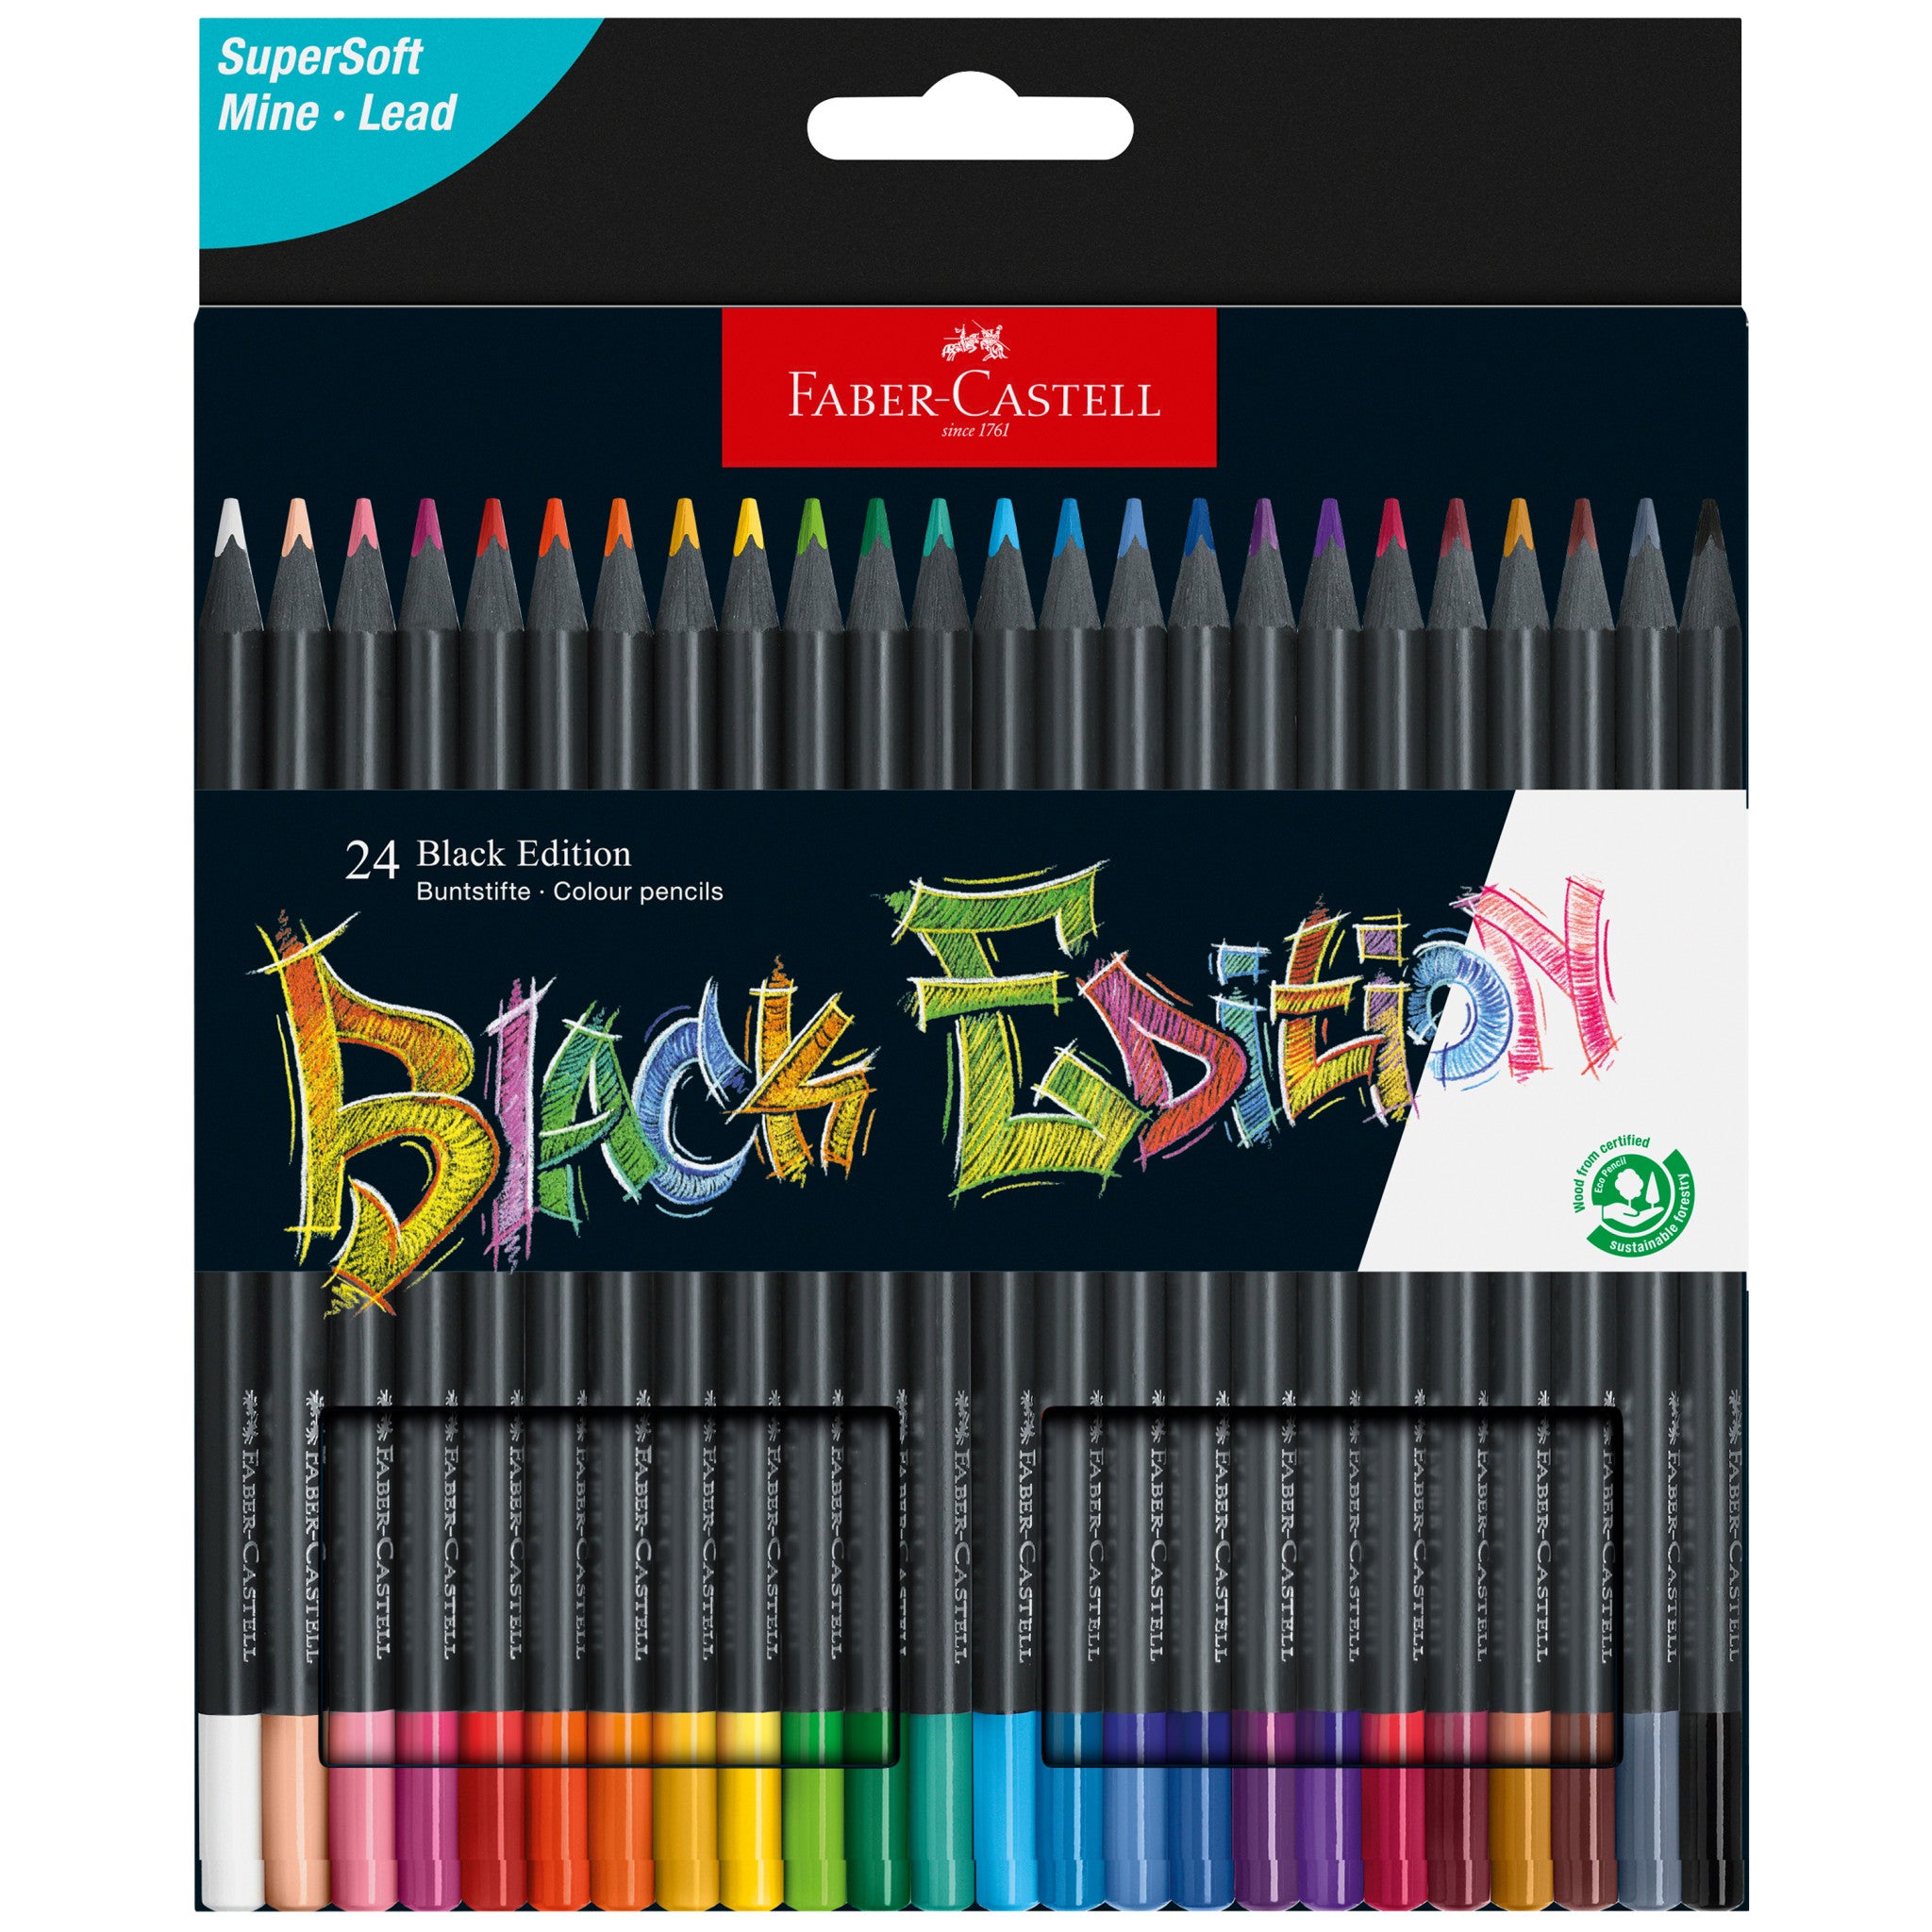 Black Edition Colored Pencils